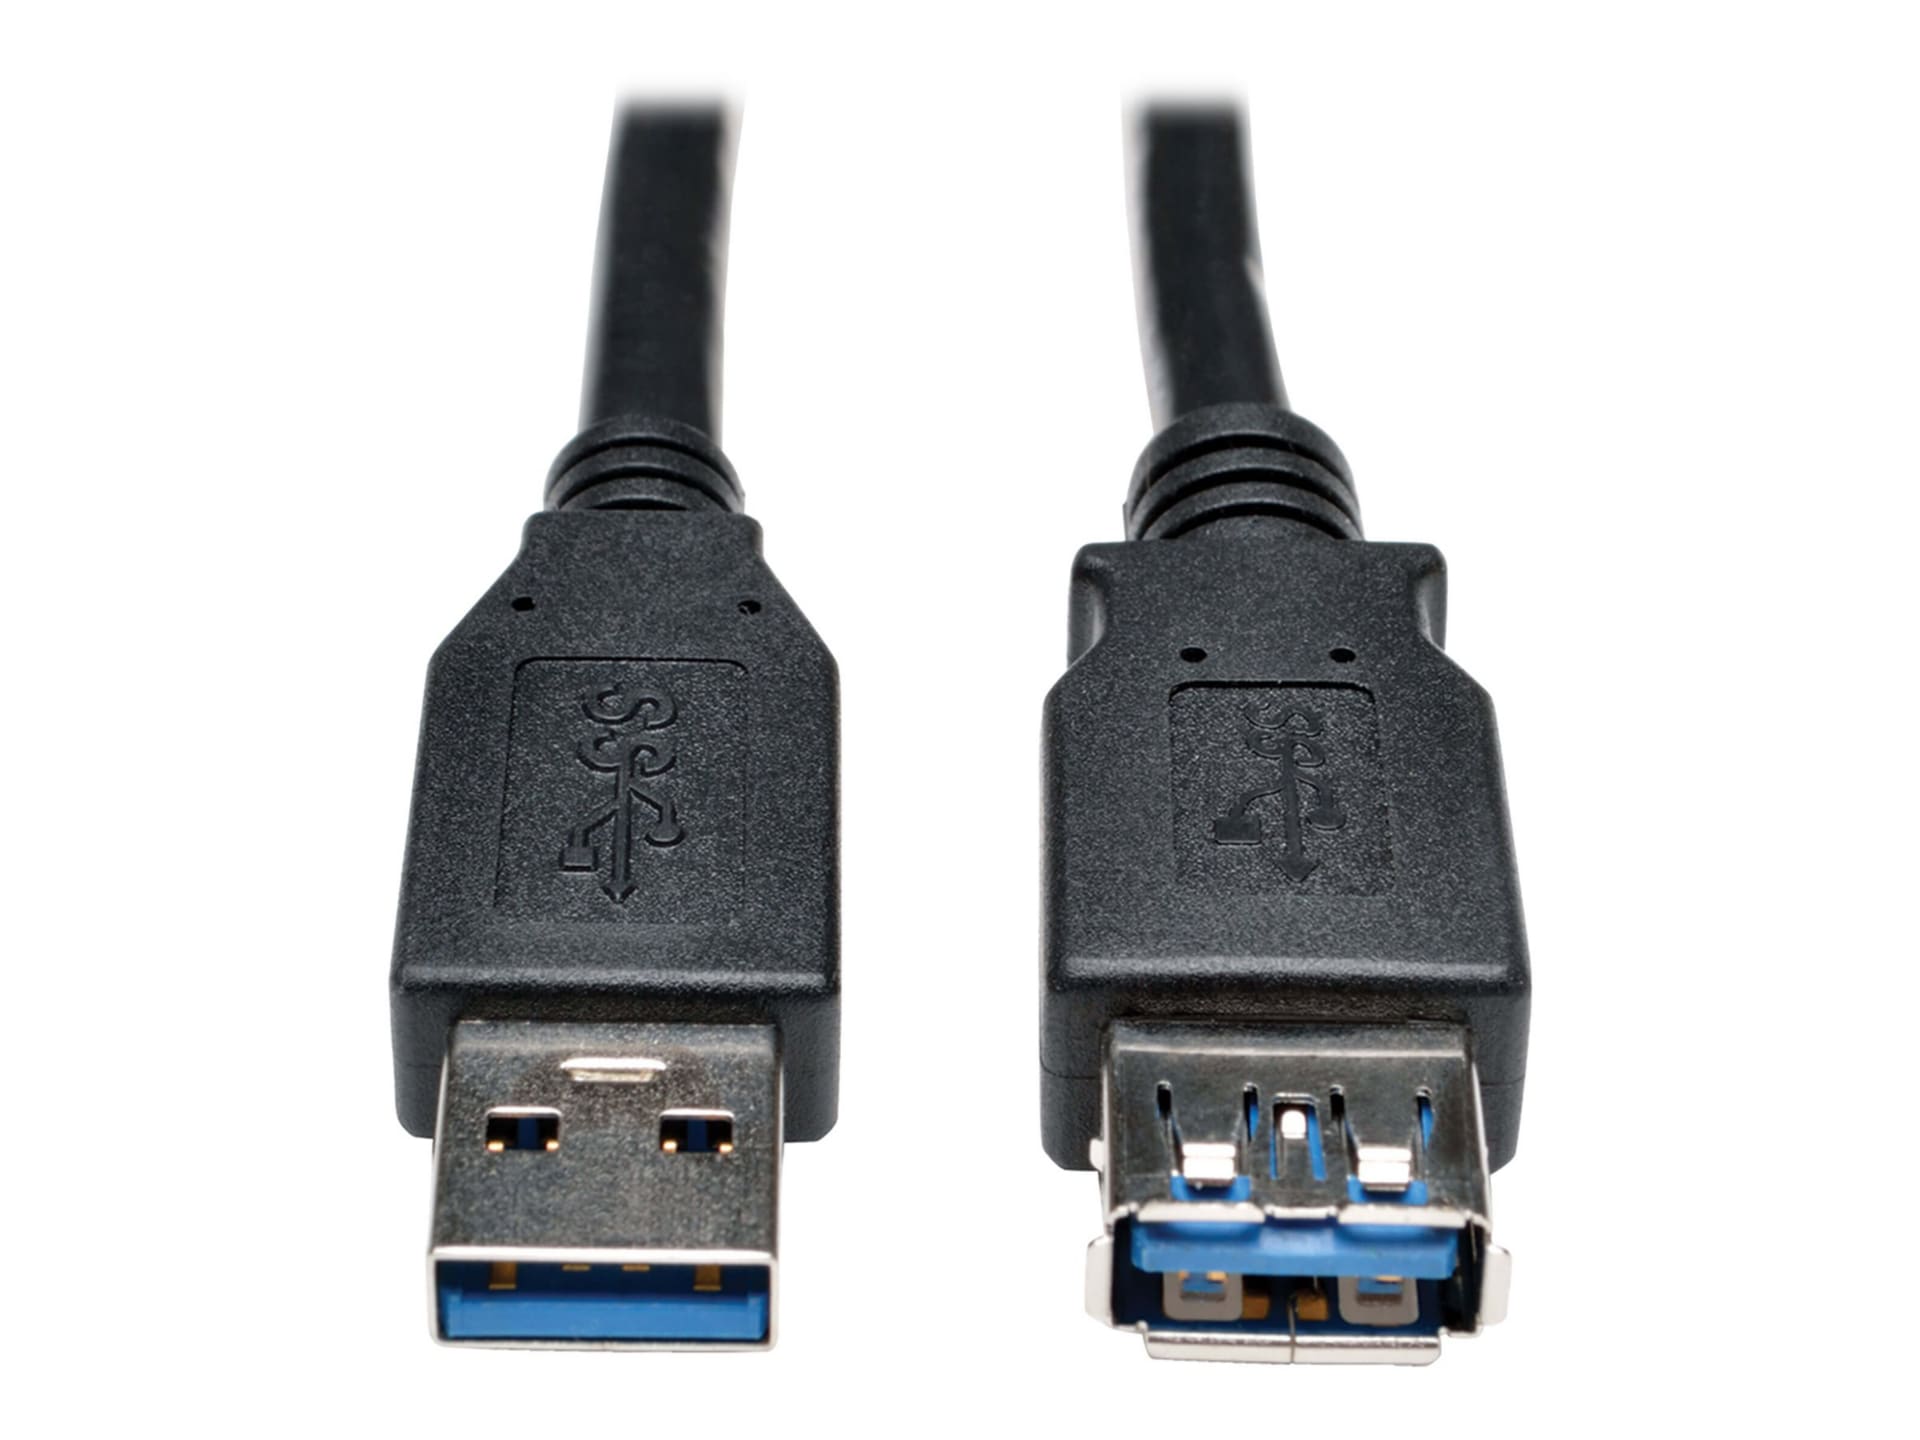 Tripp Lite Extension Cable USB 3.0 USB-A to USB-A SuperSpeed M/F Black 3ft - USB extension cable - USB Type to USB - U324-003-BK - USB Cables - CDW.com